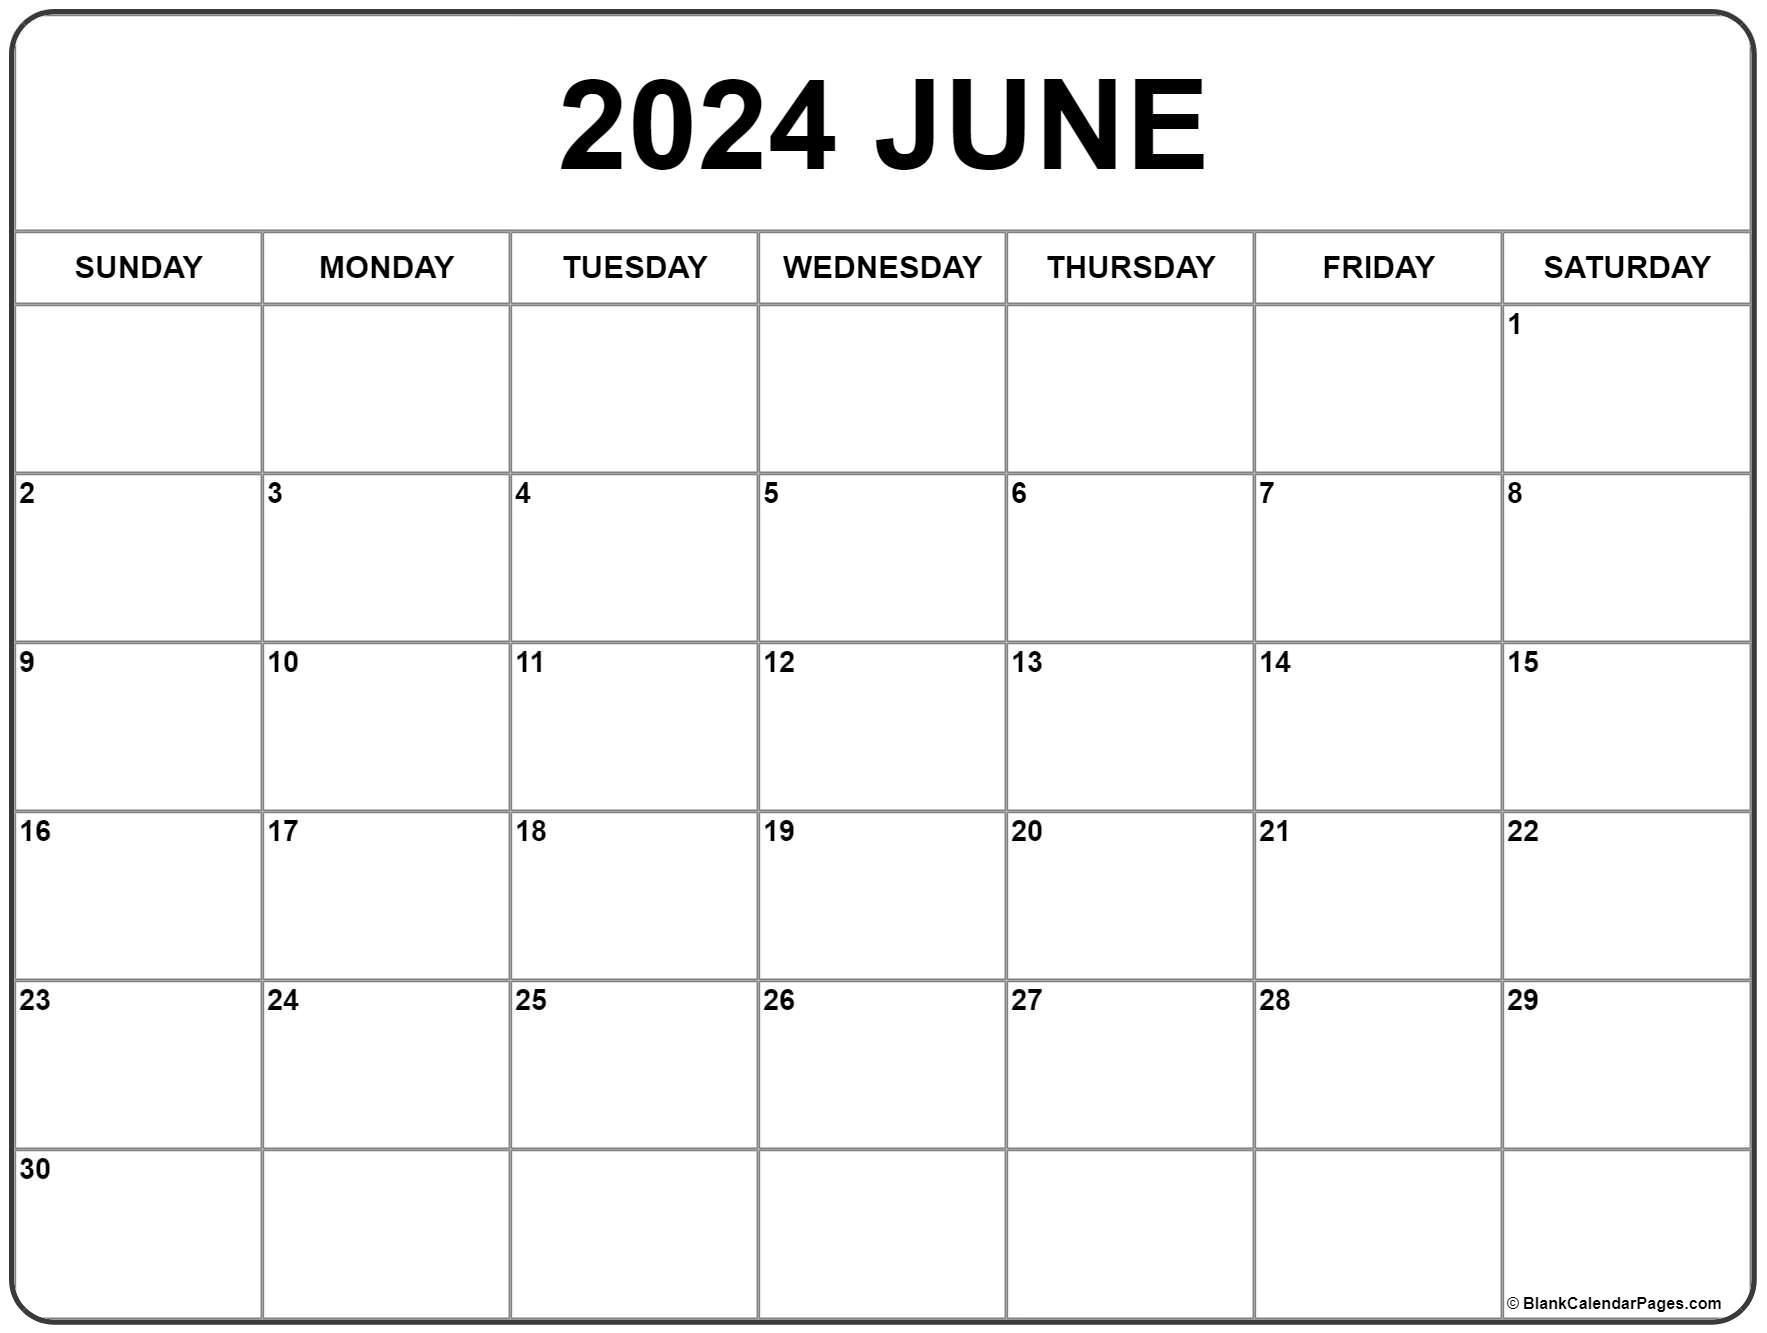 Calendar Of June 2021 June 2021 calendar | free printable monthly calendars